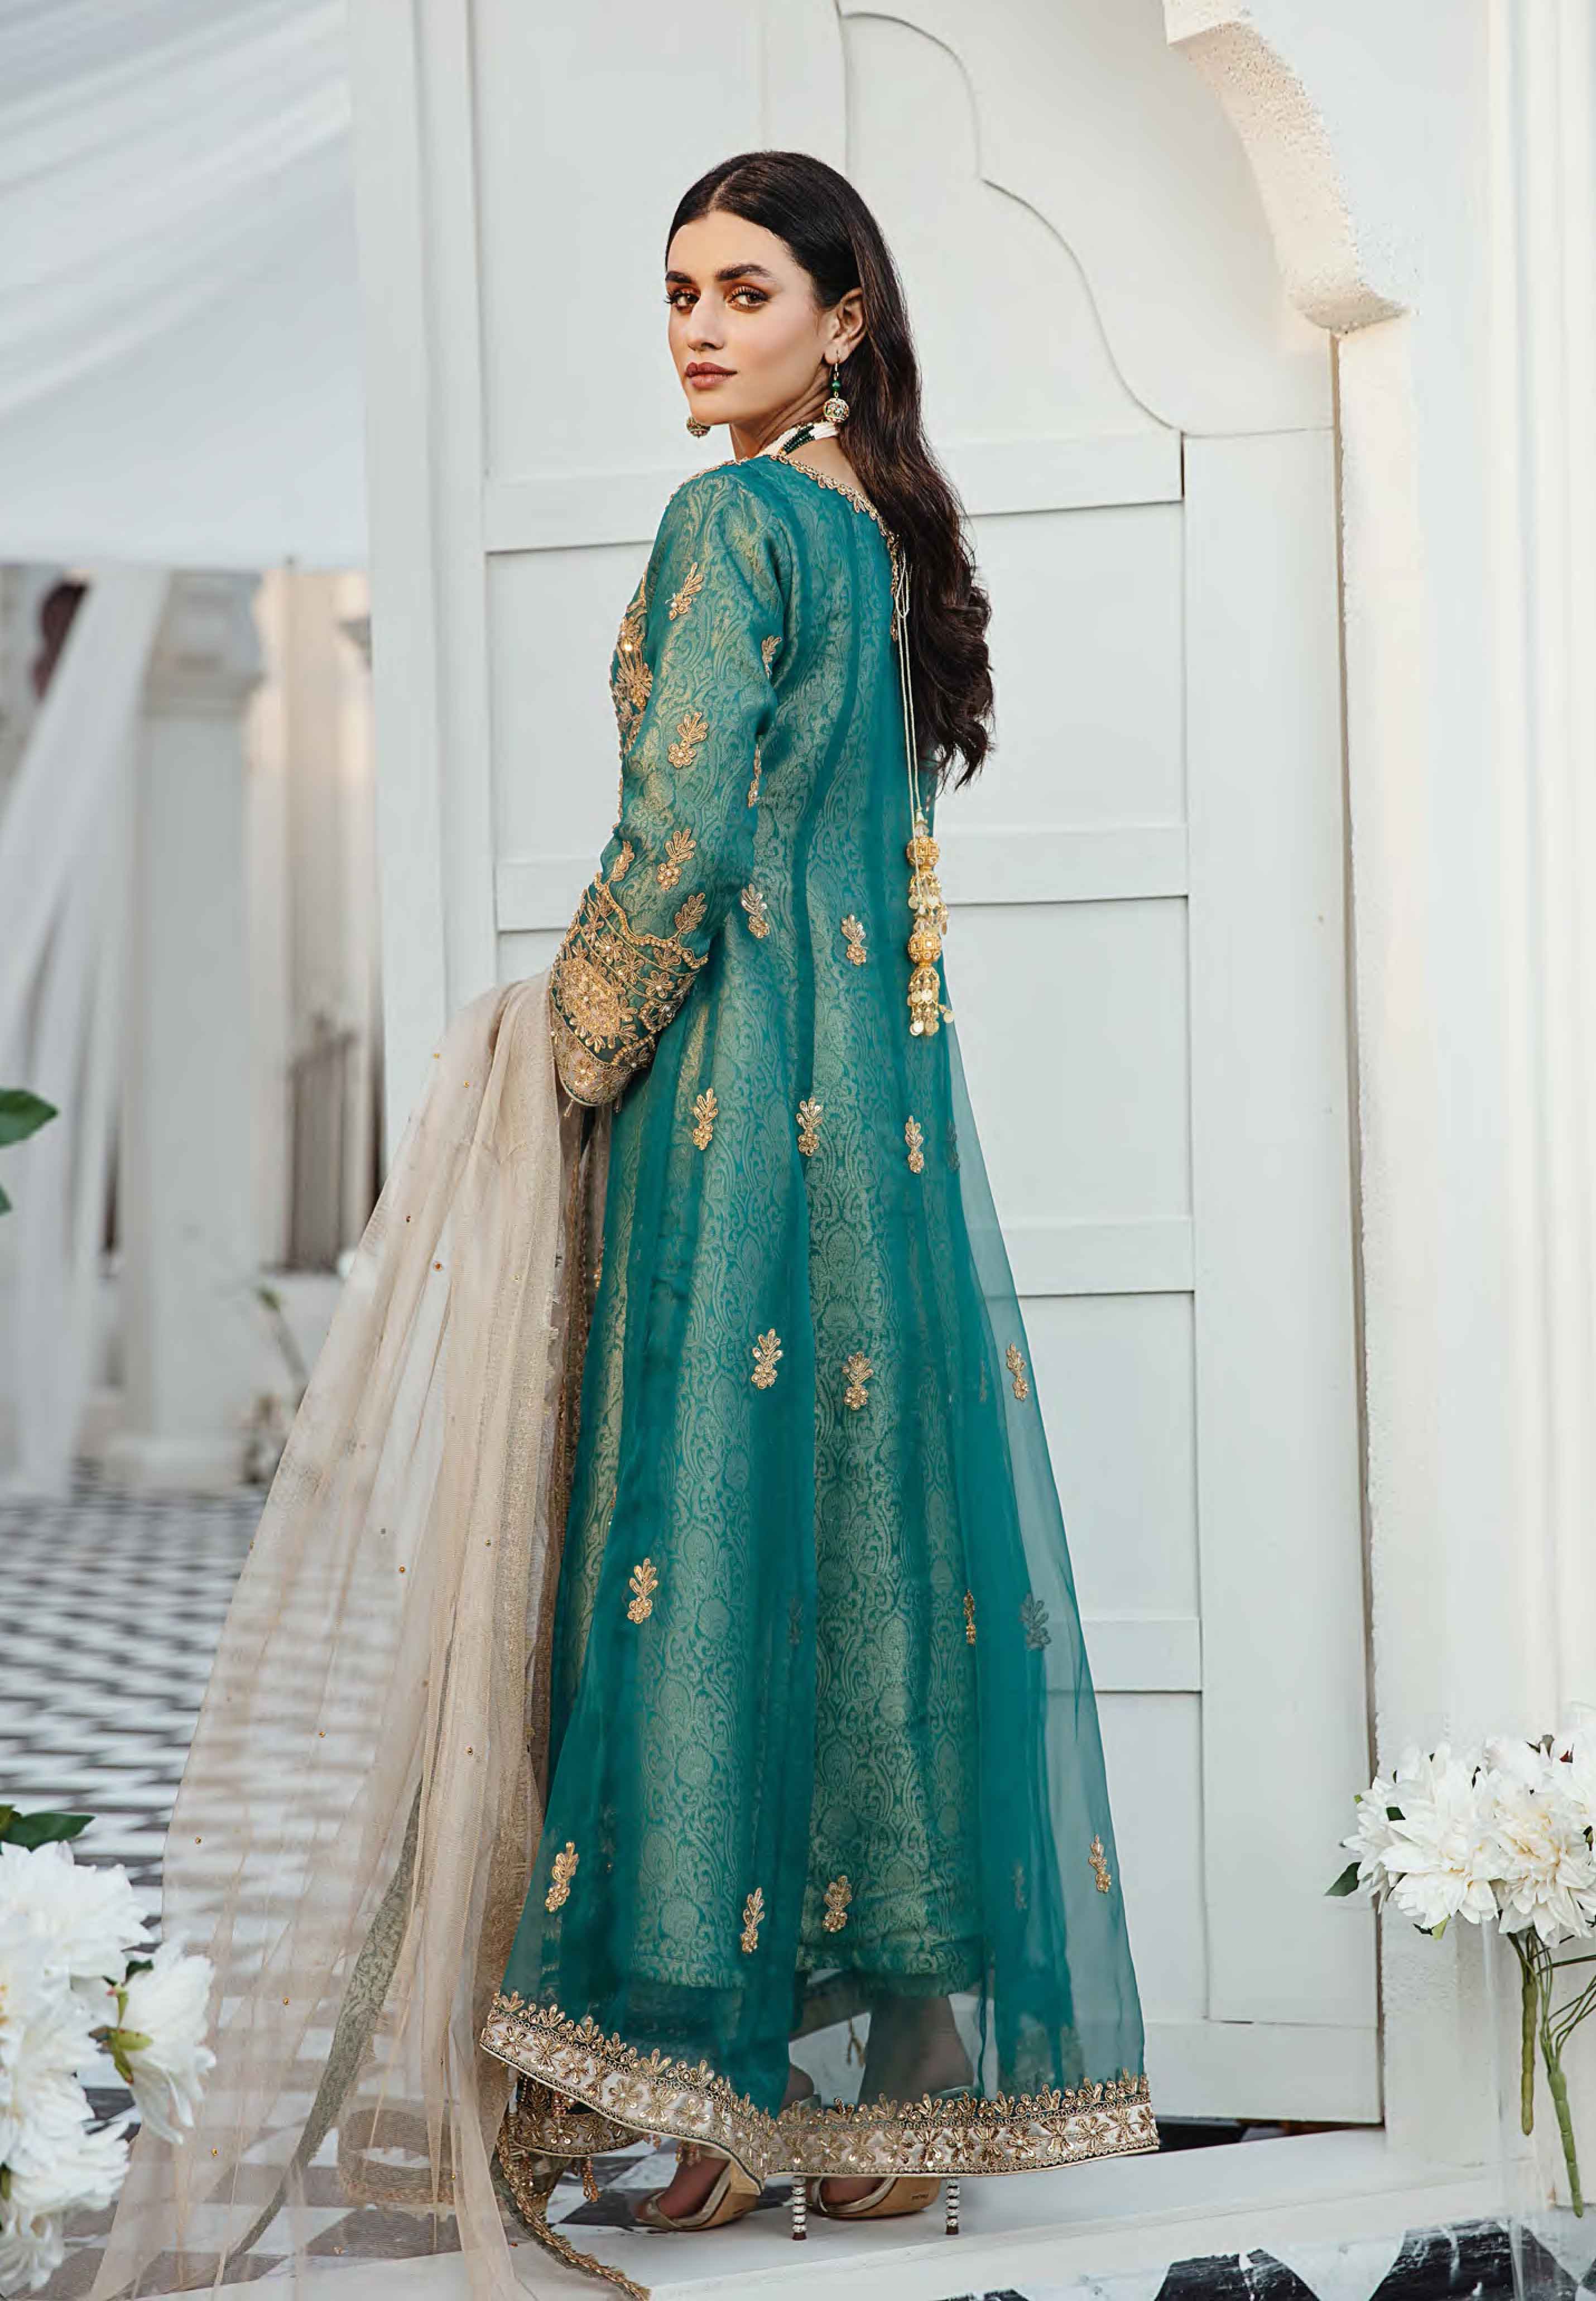 Sayuri Petals Classic New Color Indo Western Style Designer Dress Dealers